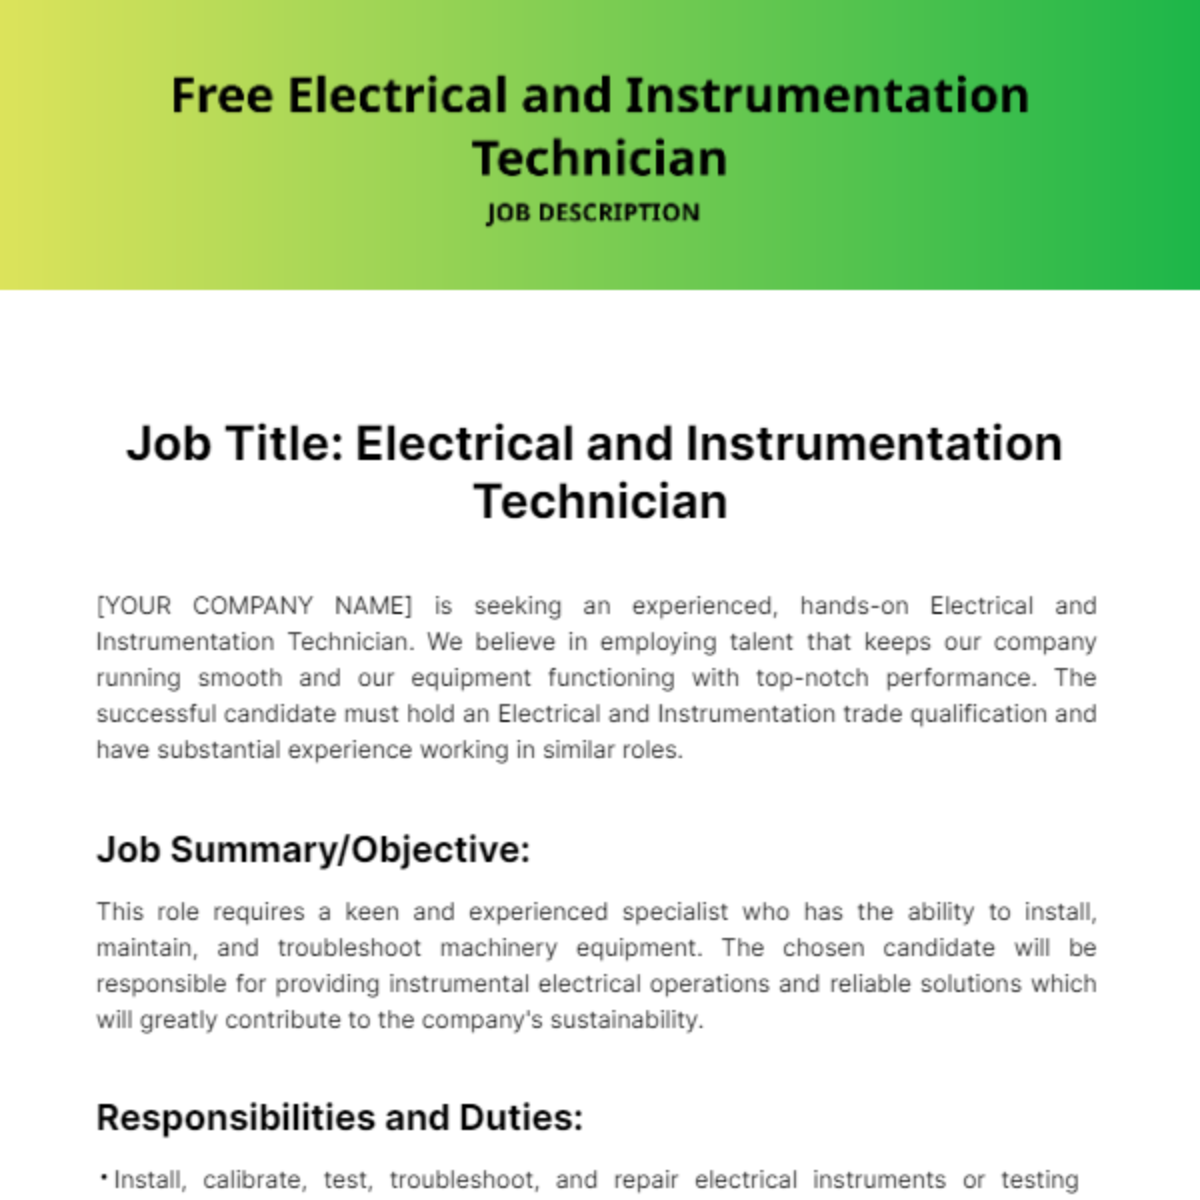 Electrical and Instrumentation Technician Job Description Template